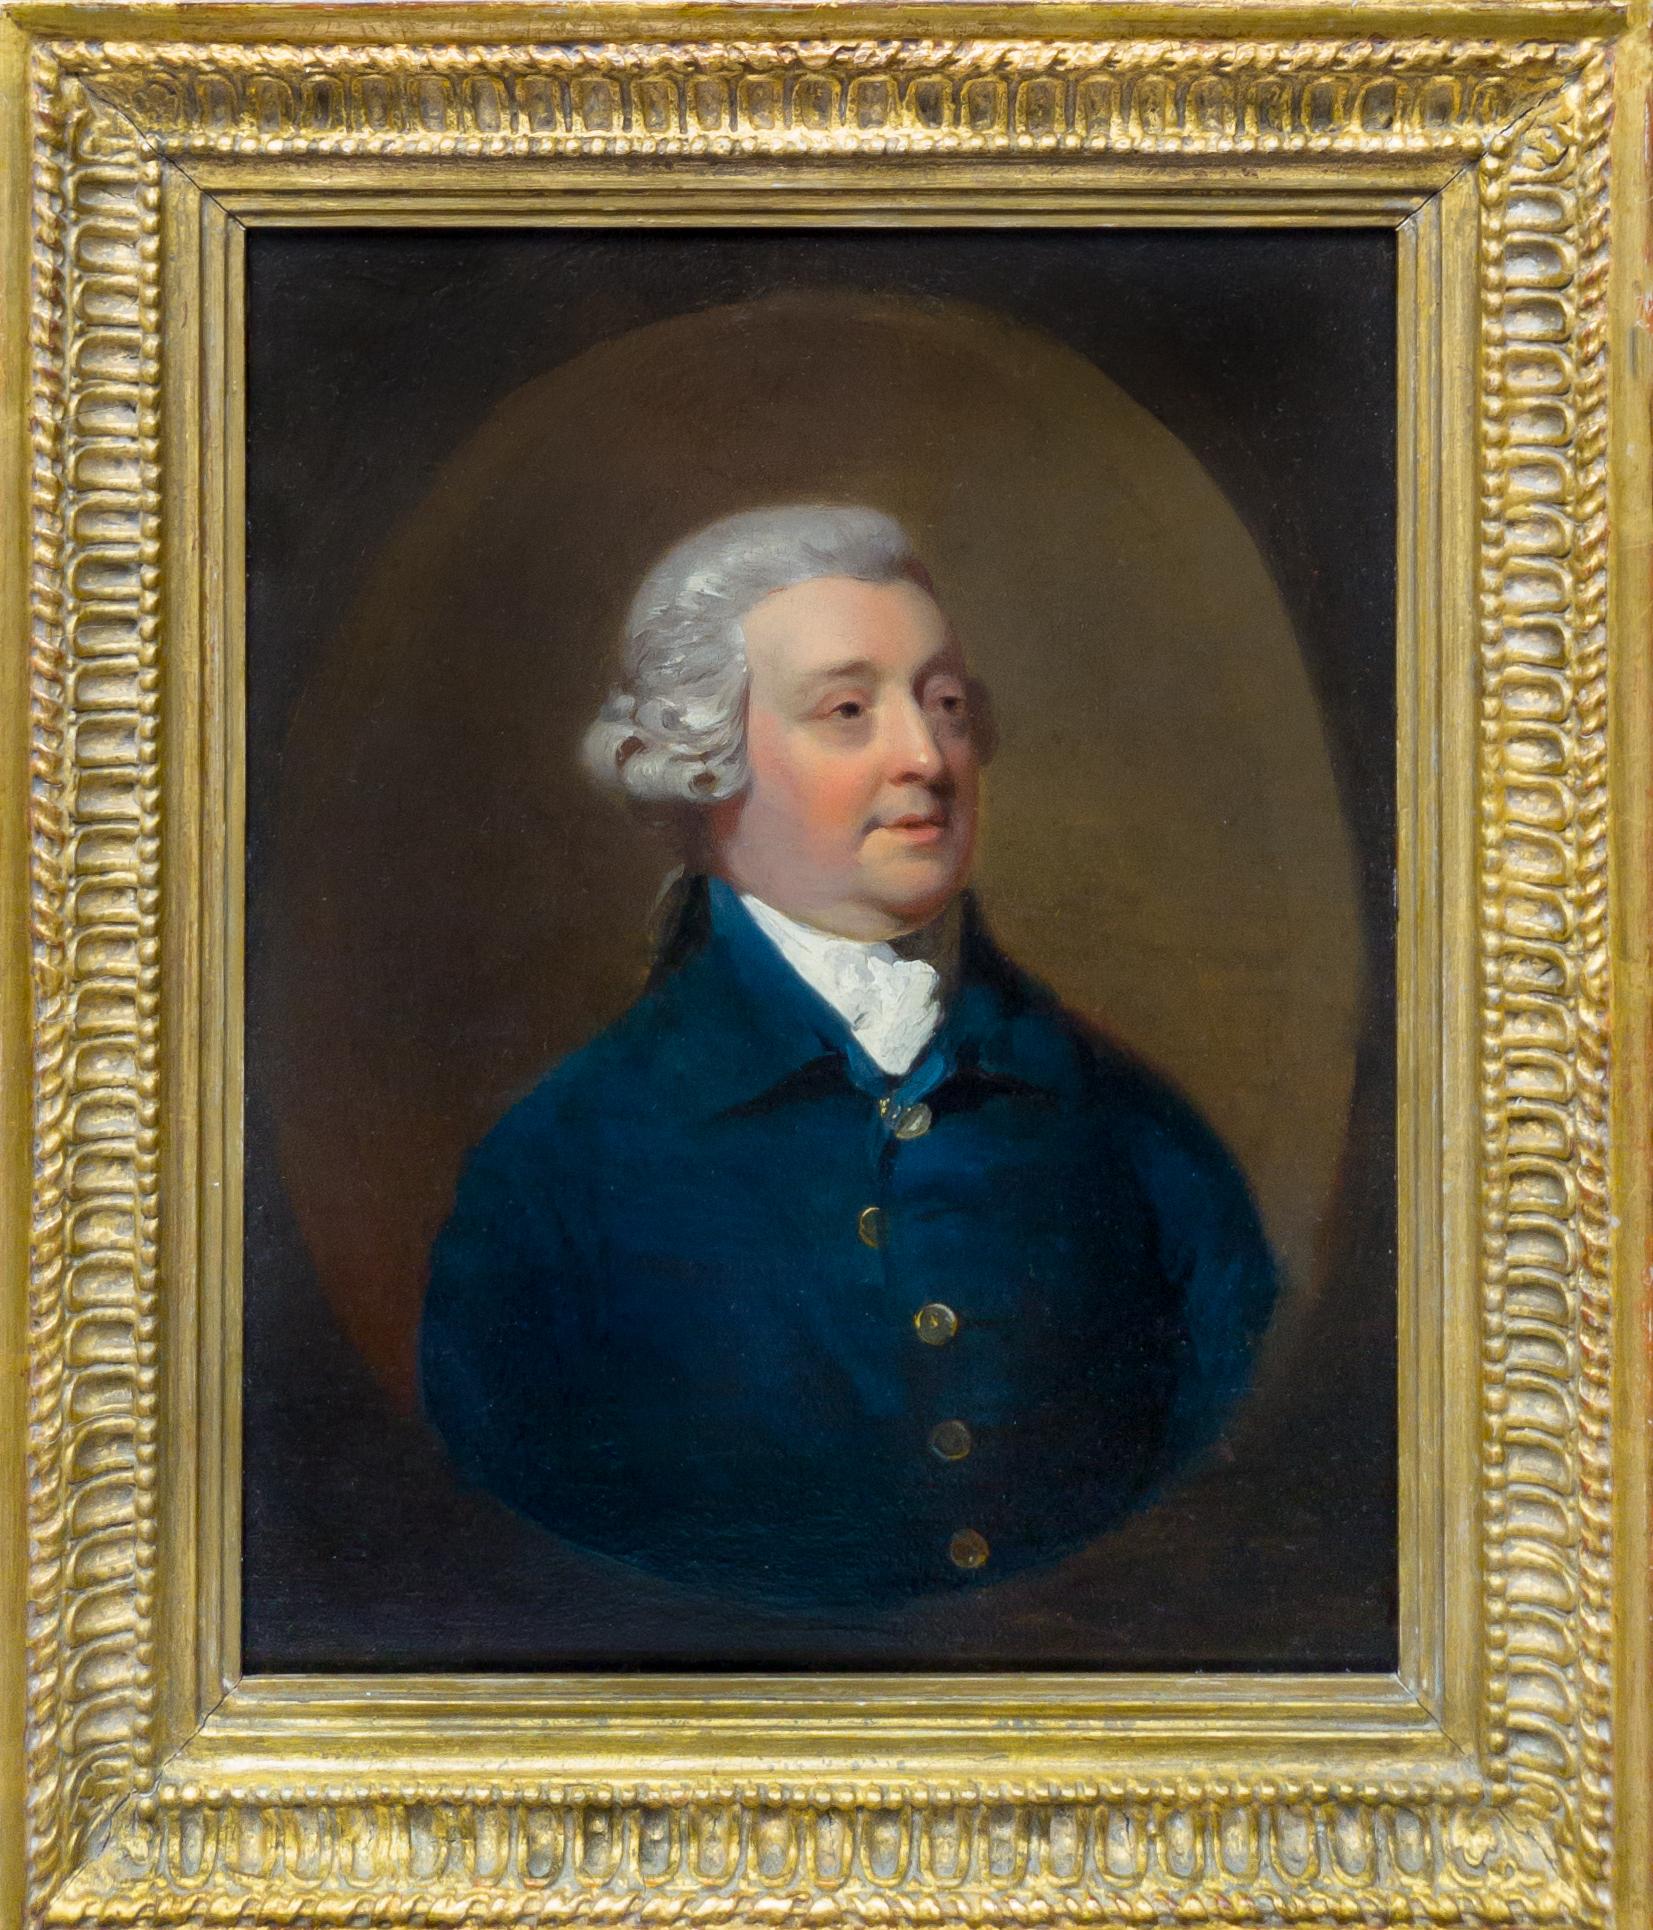 Henry Walton Portrait Painting - Fine Portrait of Gentleman in Blue Coat & Powdered Wig c.1775, Rare Oil on Panel